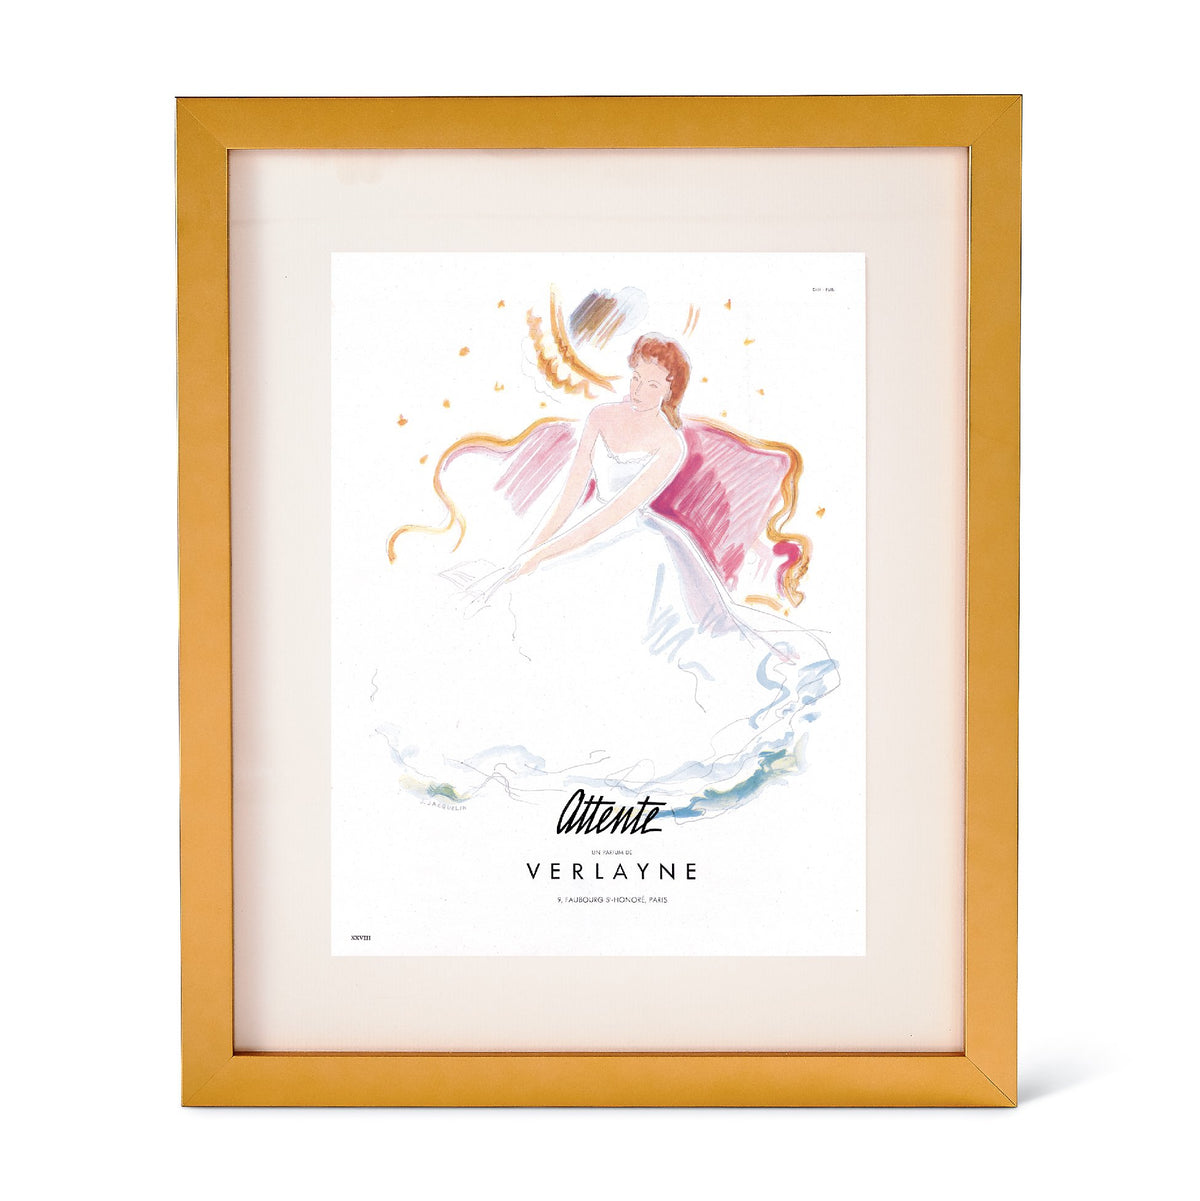 Verlayne Parfum Art Print in Frame